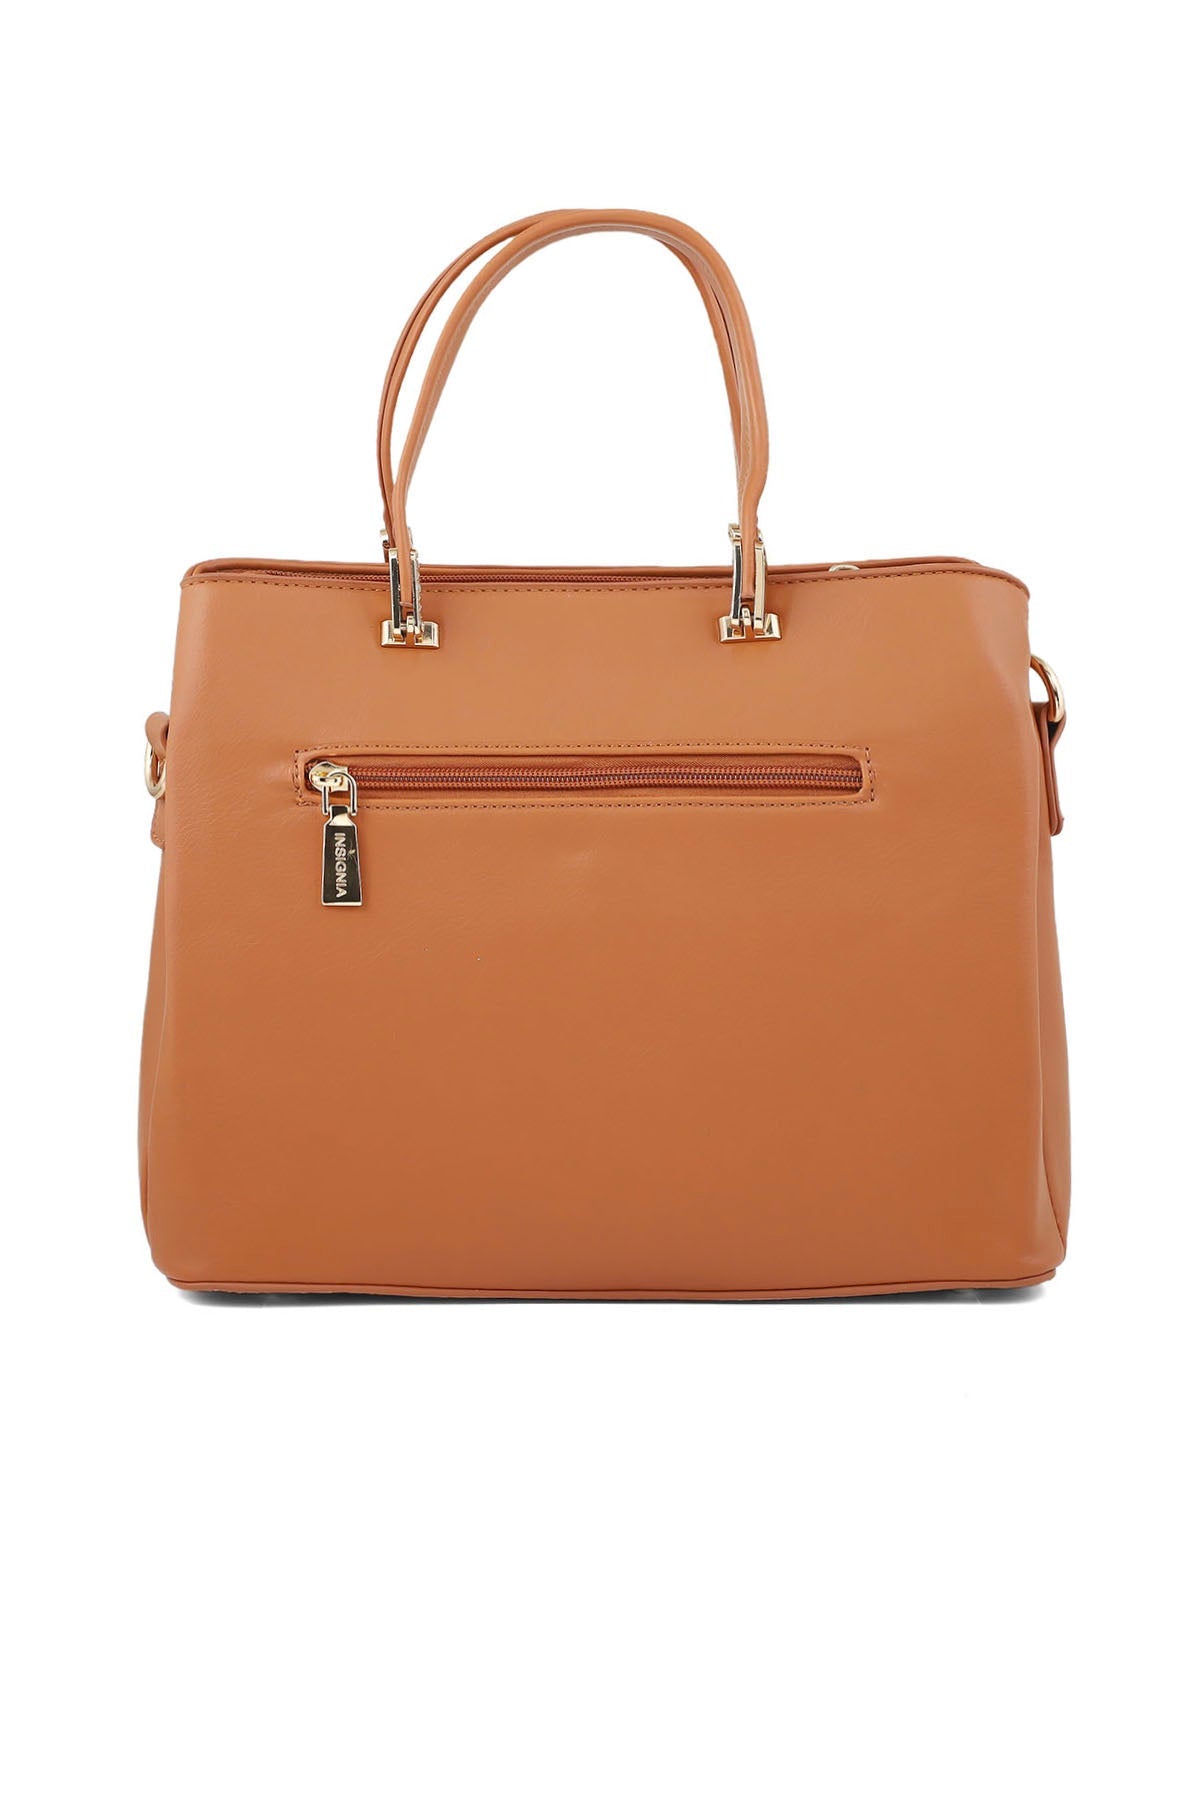 Formal Tote Hand Bags B15055-Brown